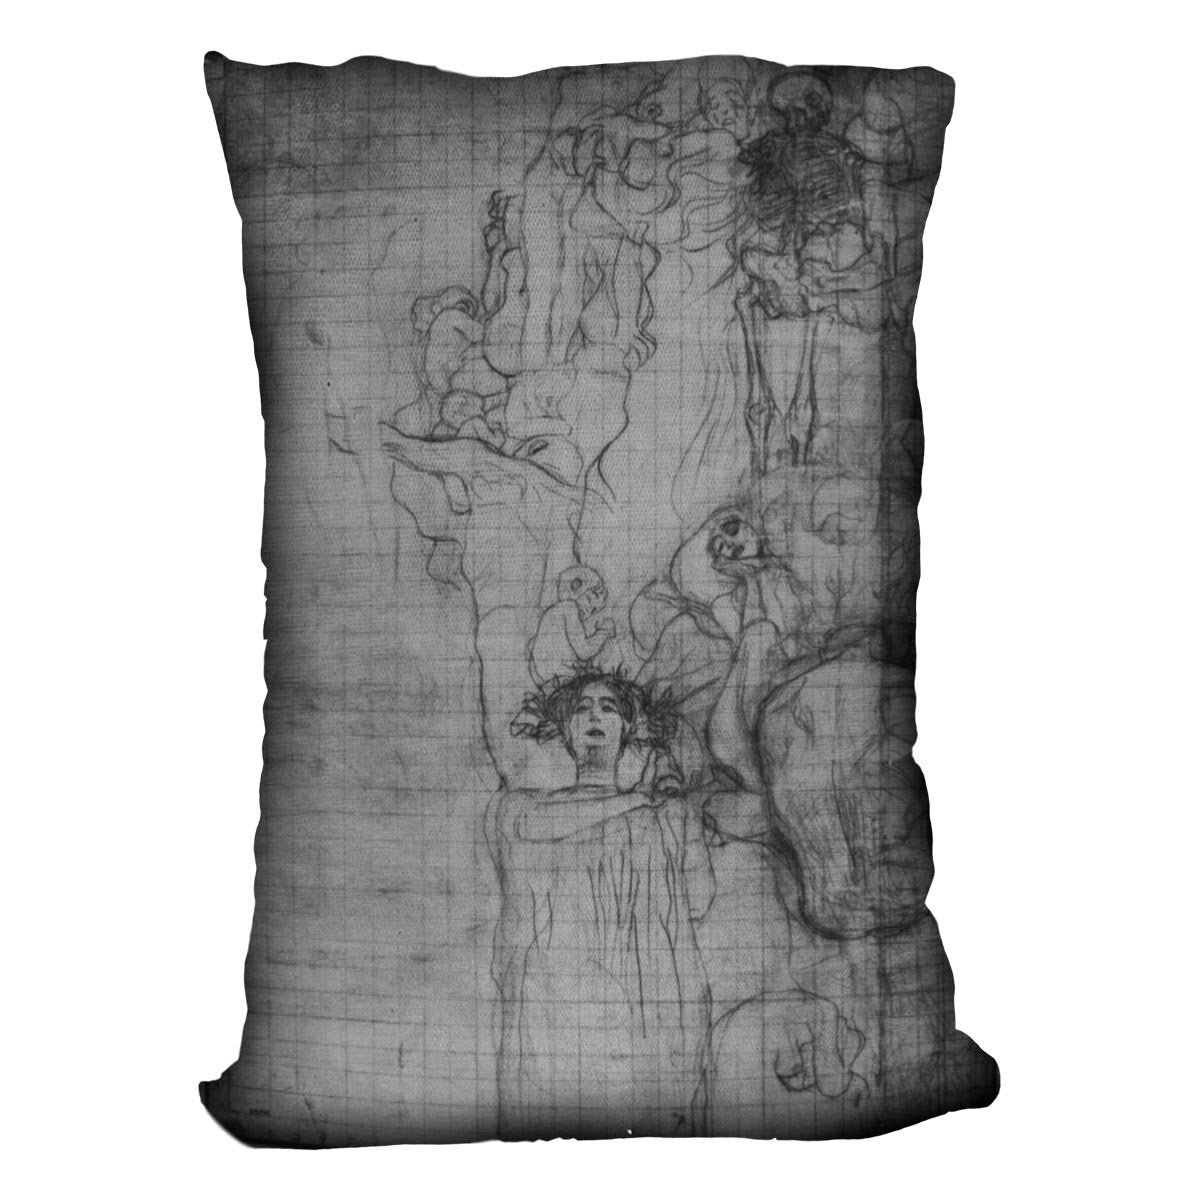 Sketch of Medicine by Klimt Throw Pillow